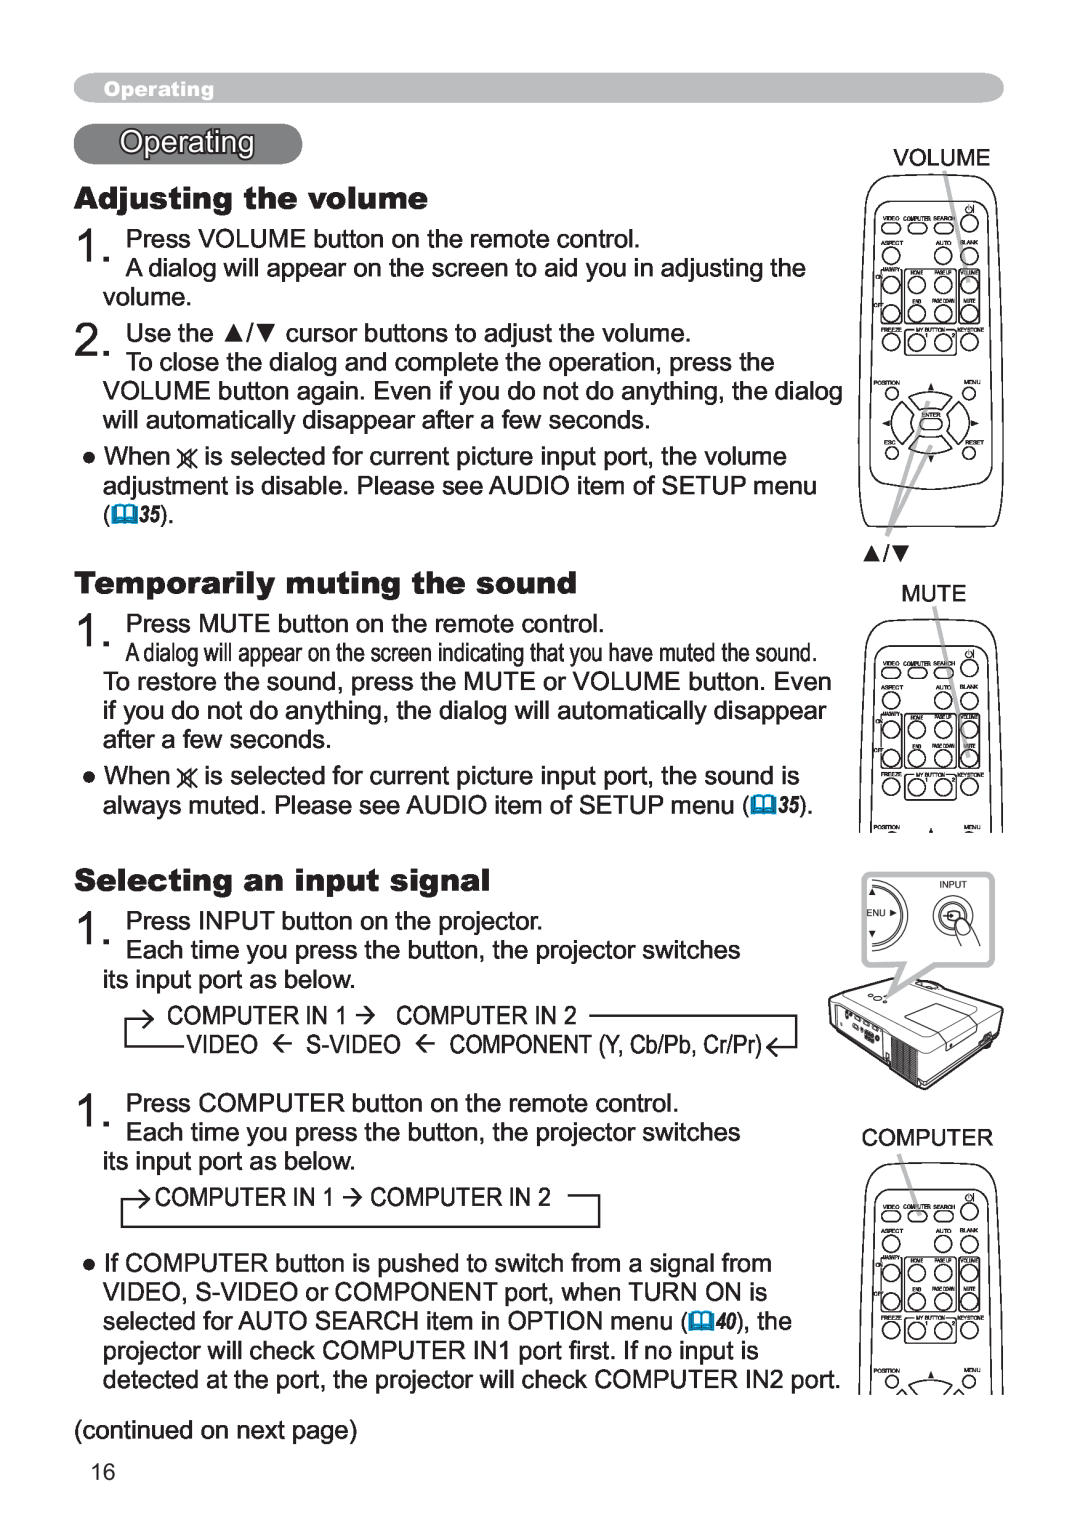 Hitachi ED-X32 2SHUDWLQJ, Adjusting the volume, Temporarily muting the sound, Selecting an input signal, Yroxph 